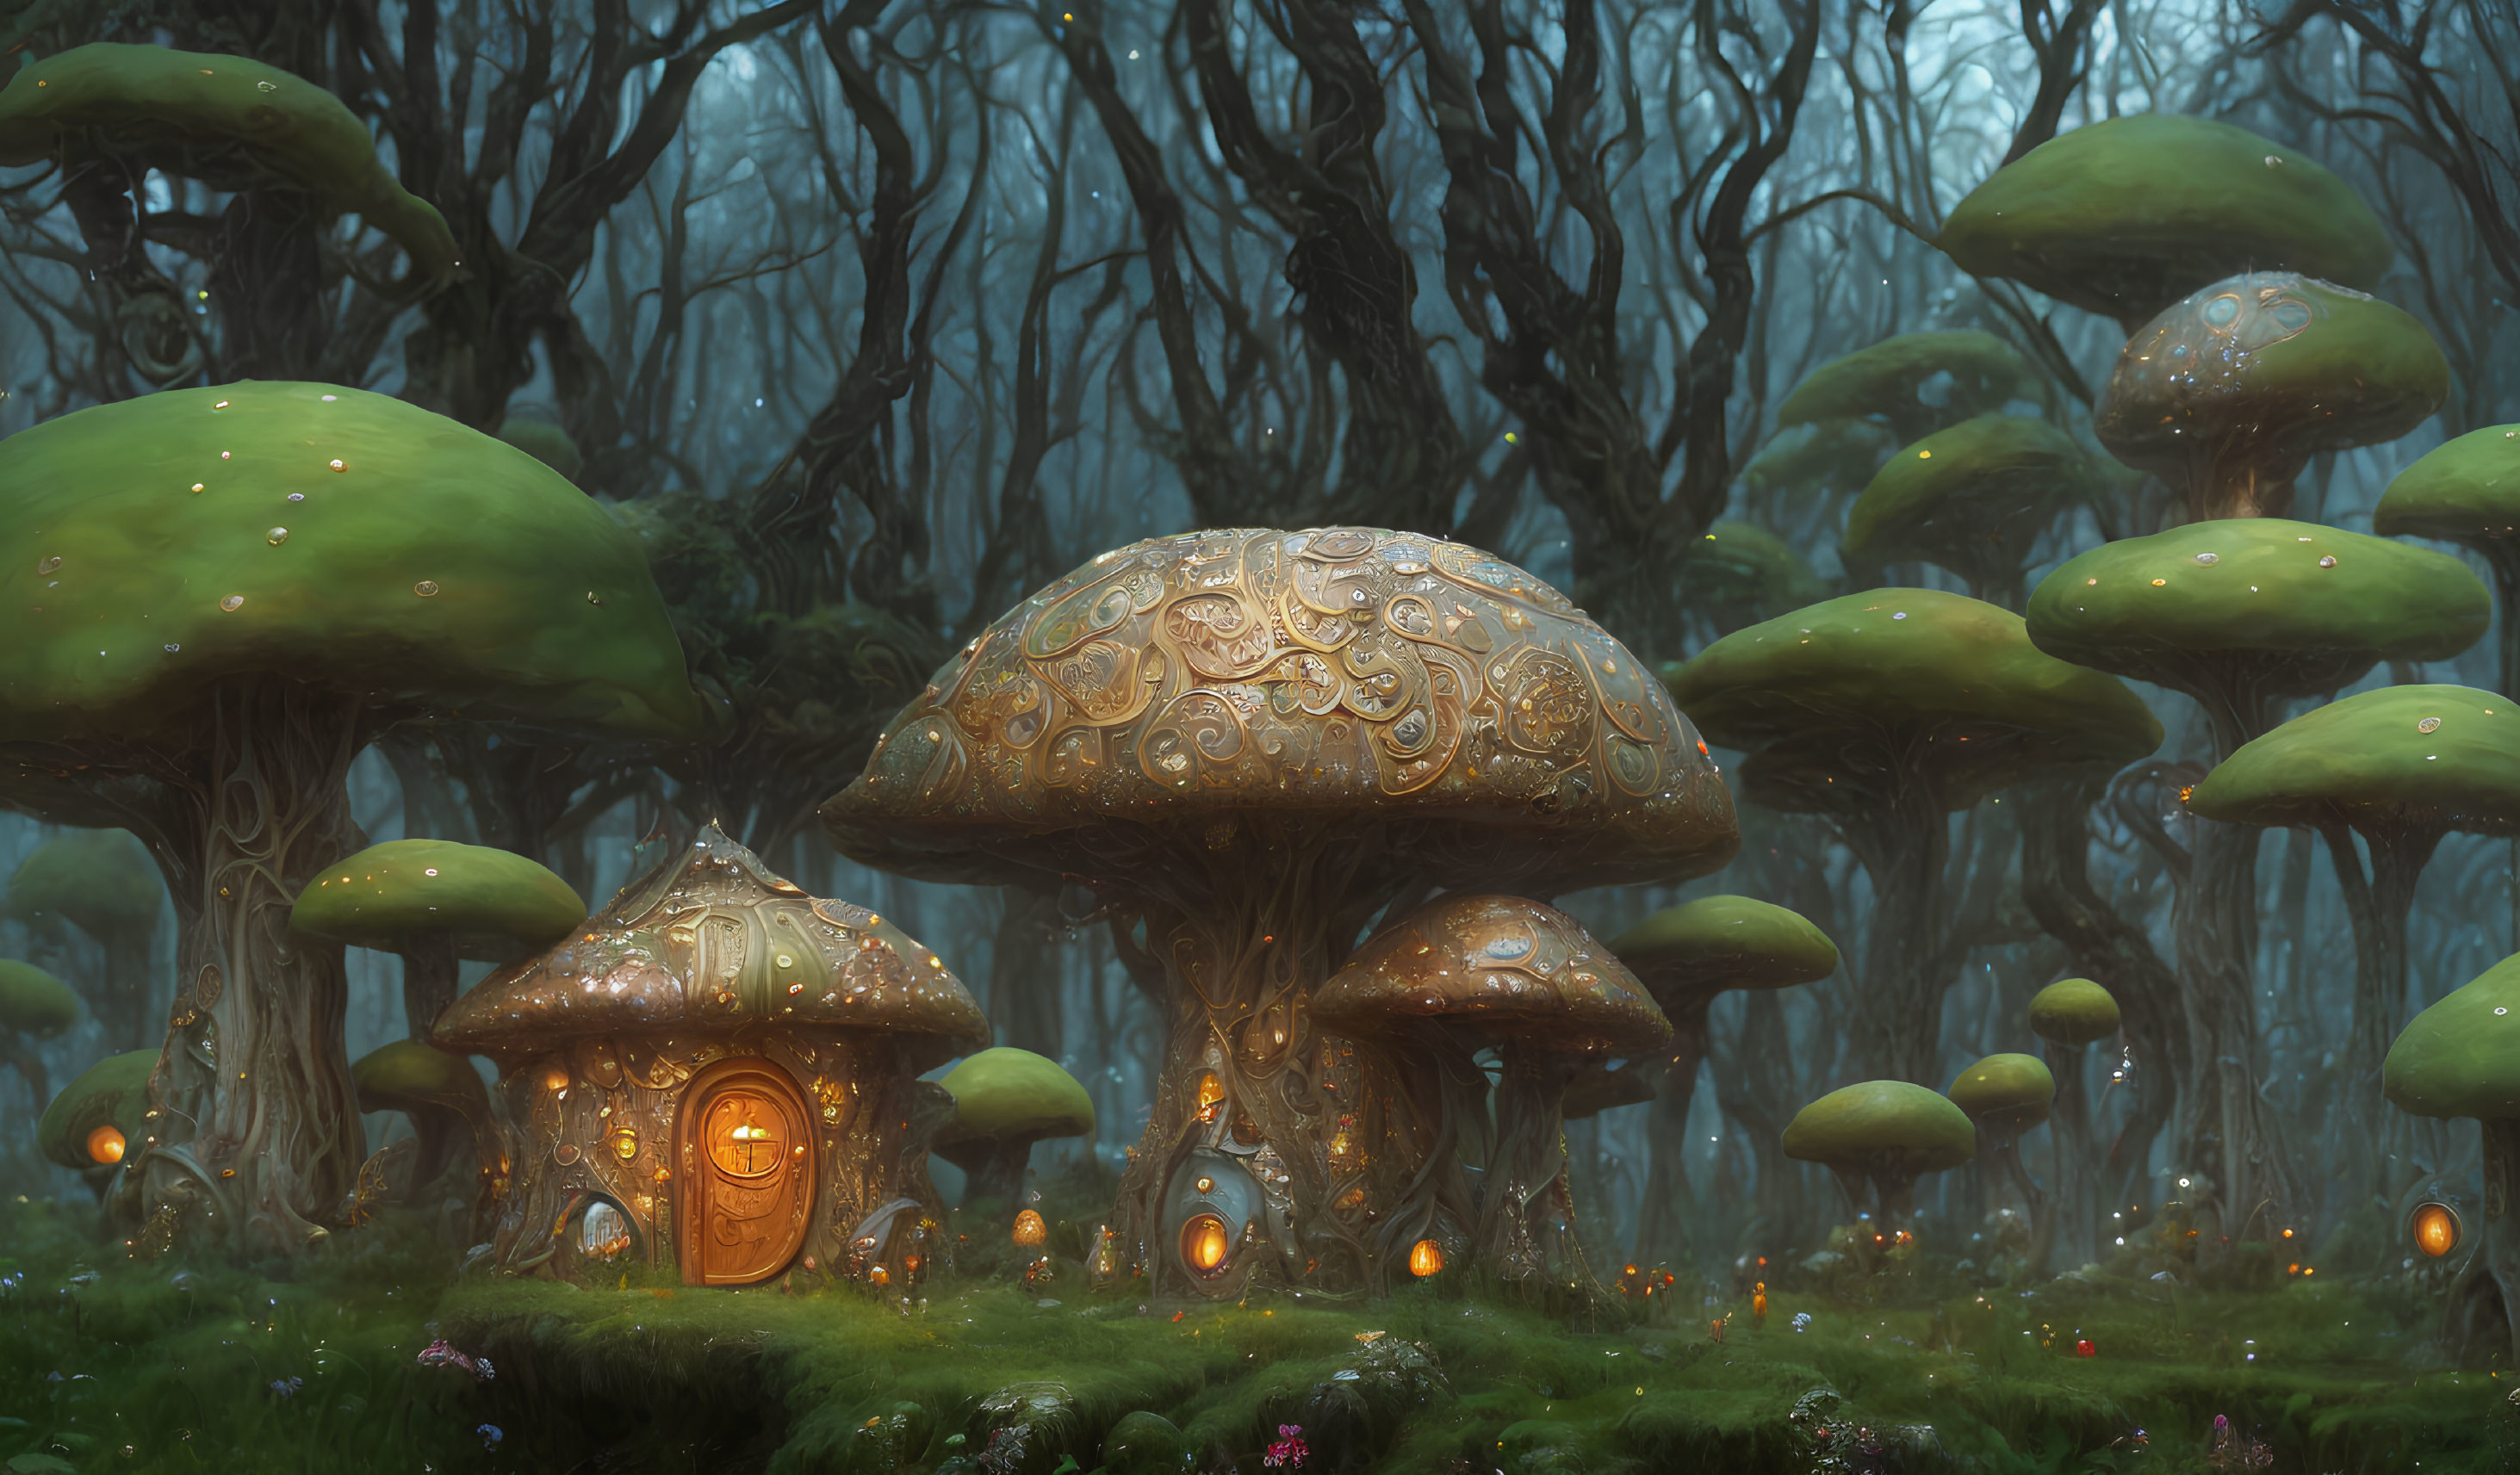 Enchanted forest with oversized illuminated mushrooms in mystical foggy setting